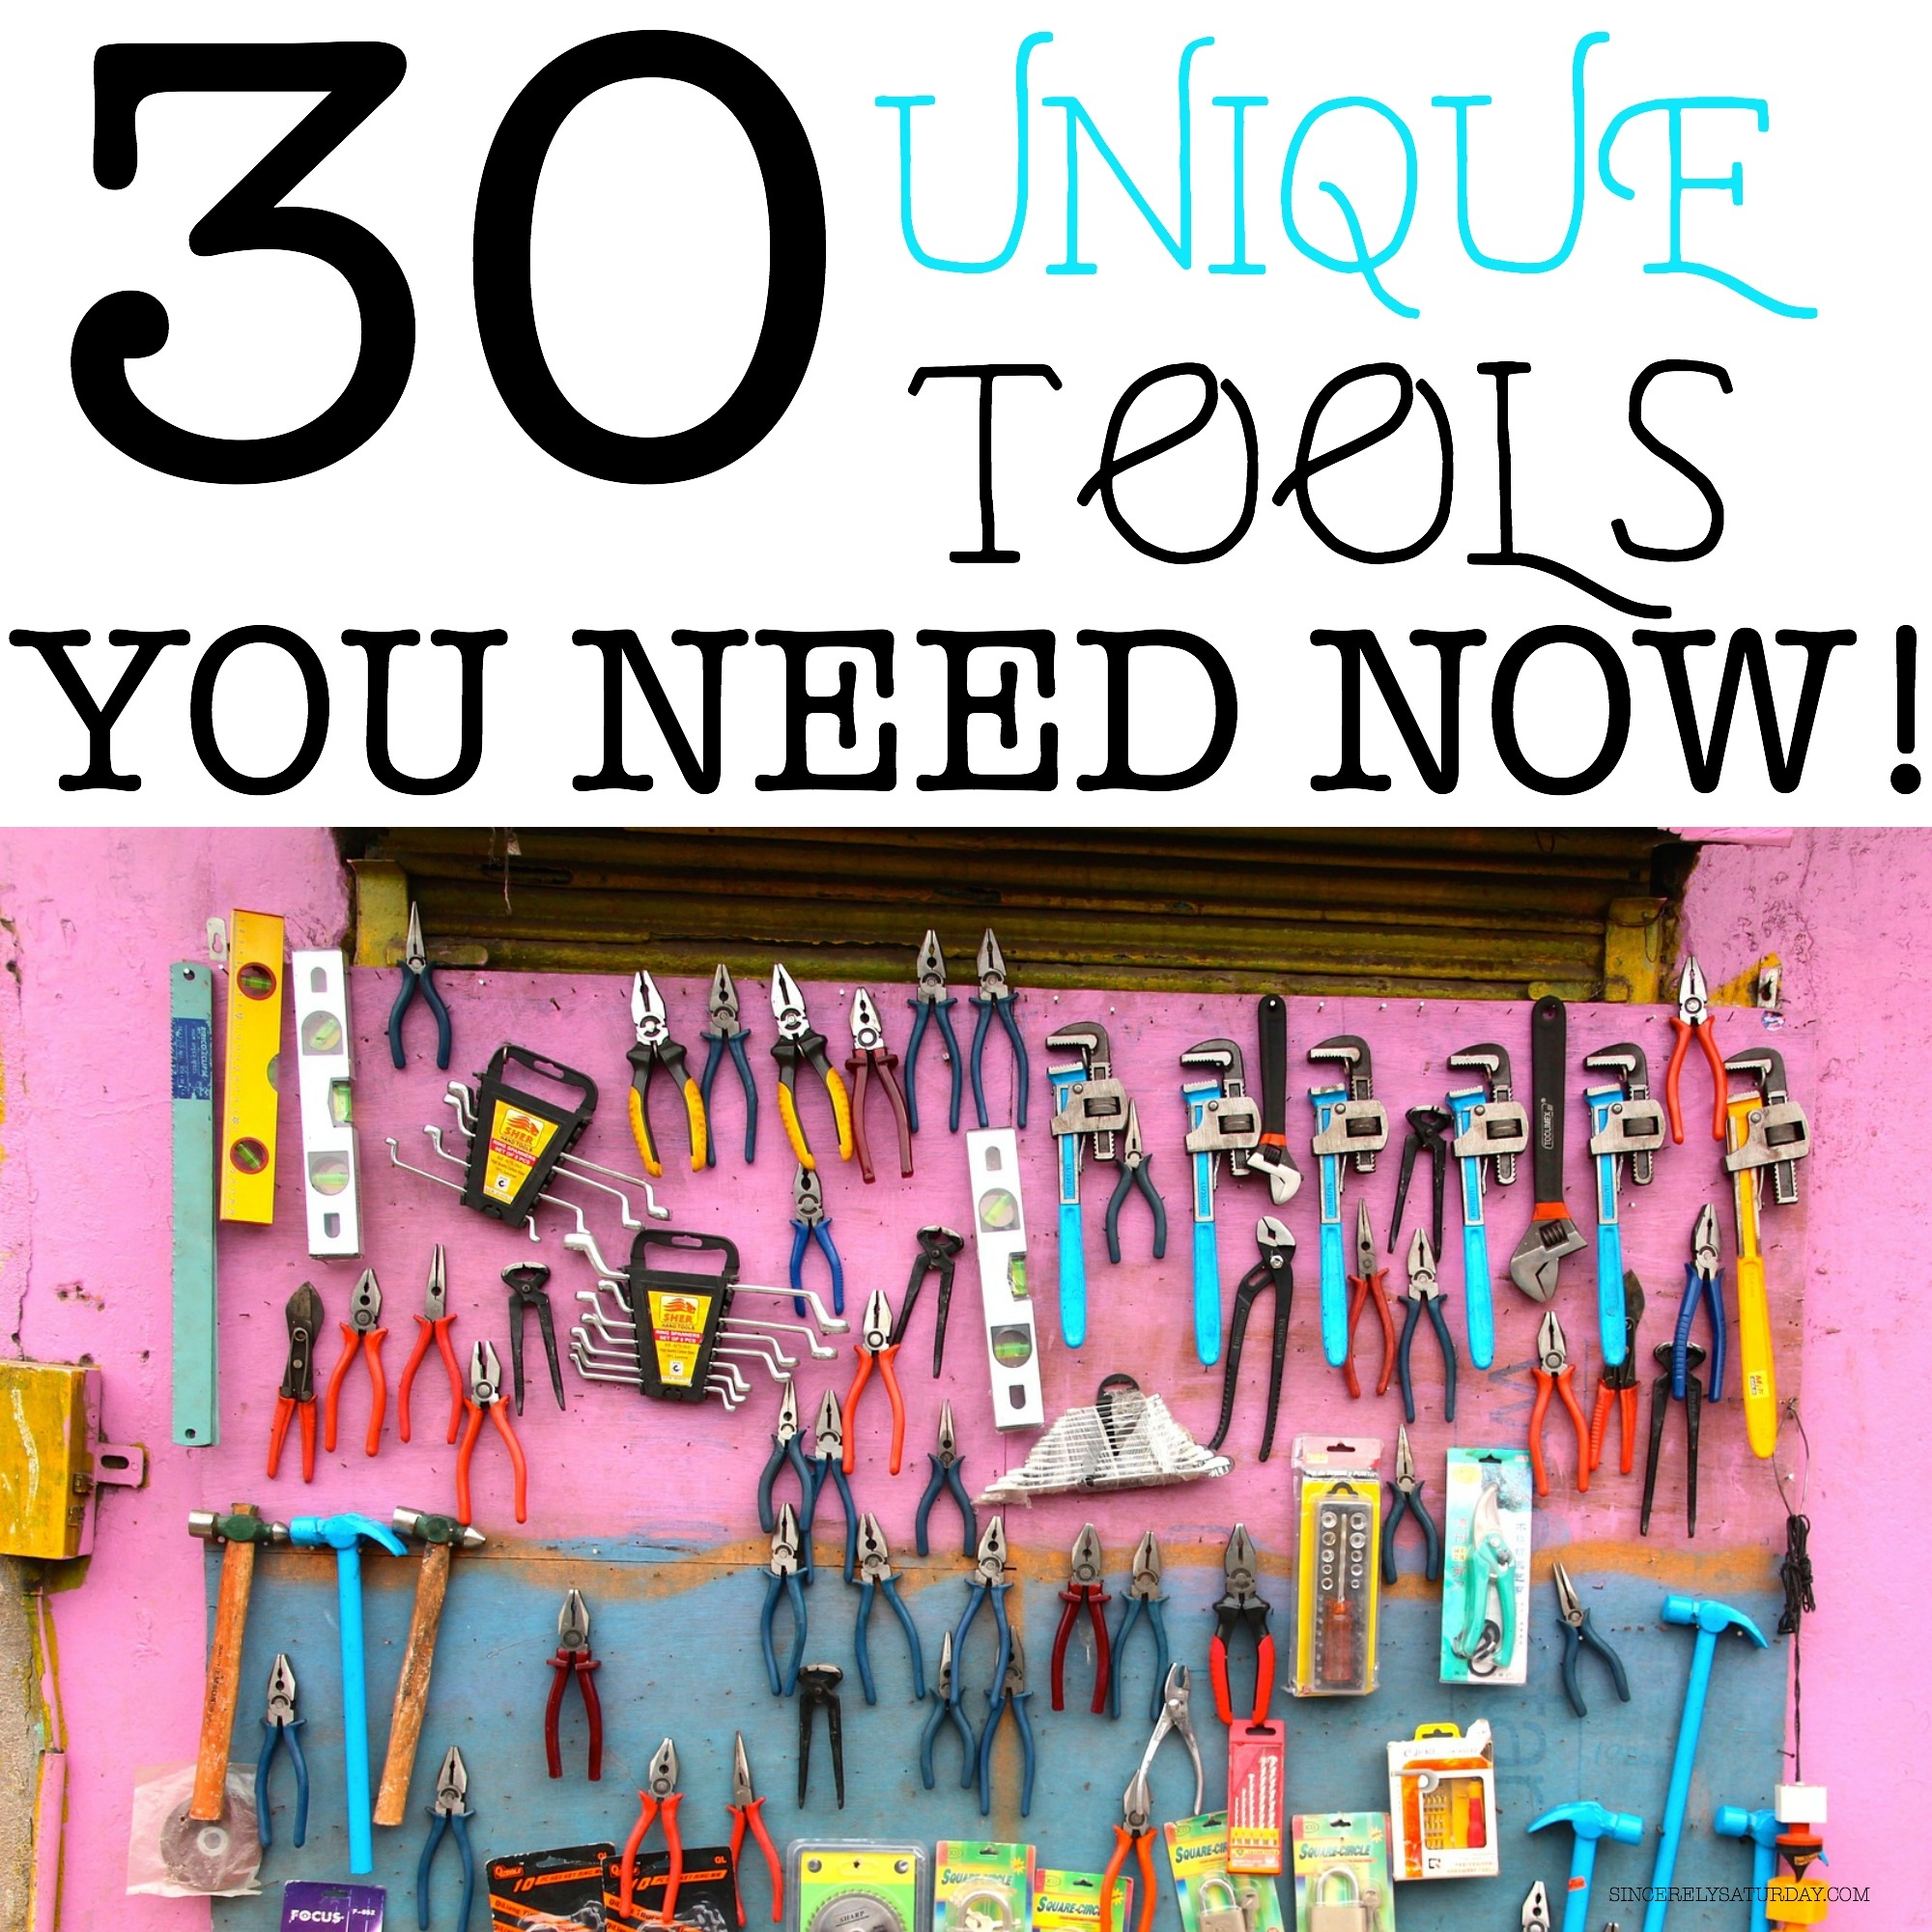 16 Best Tools Every Homeowner Needs